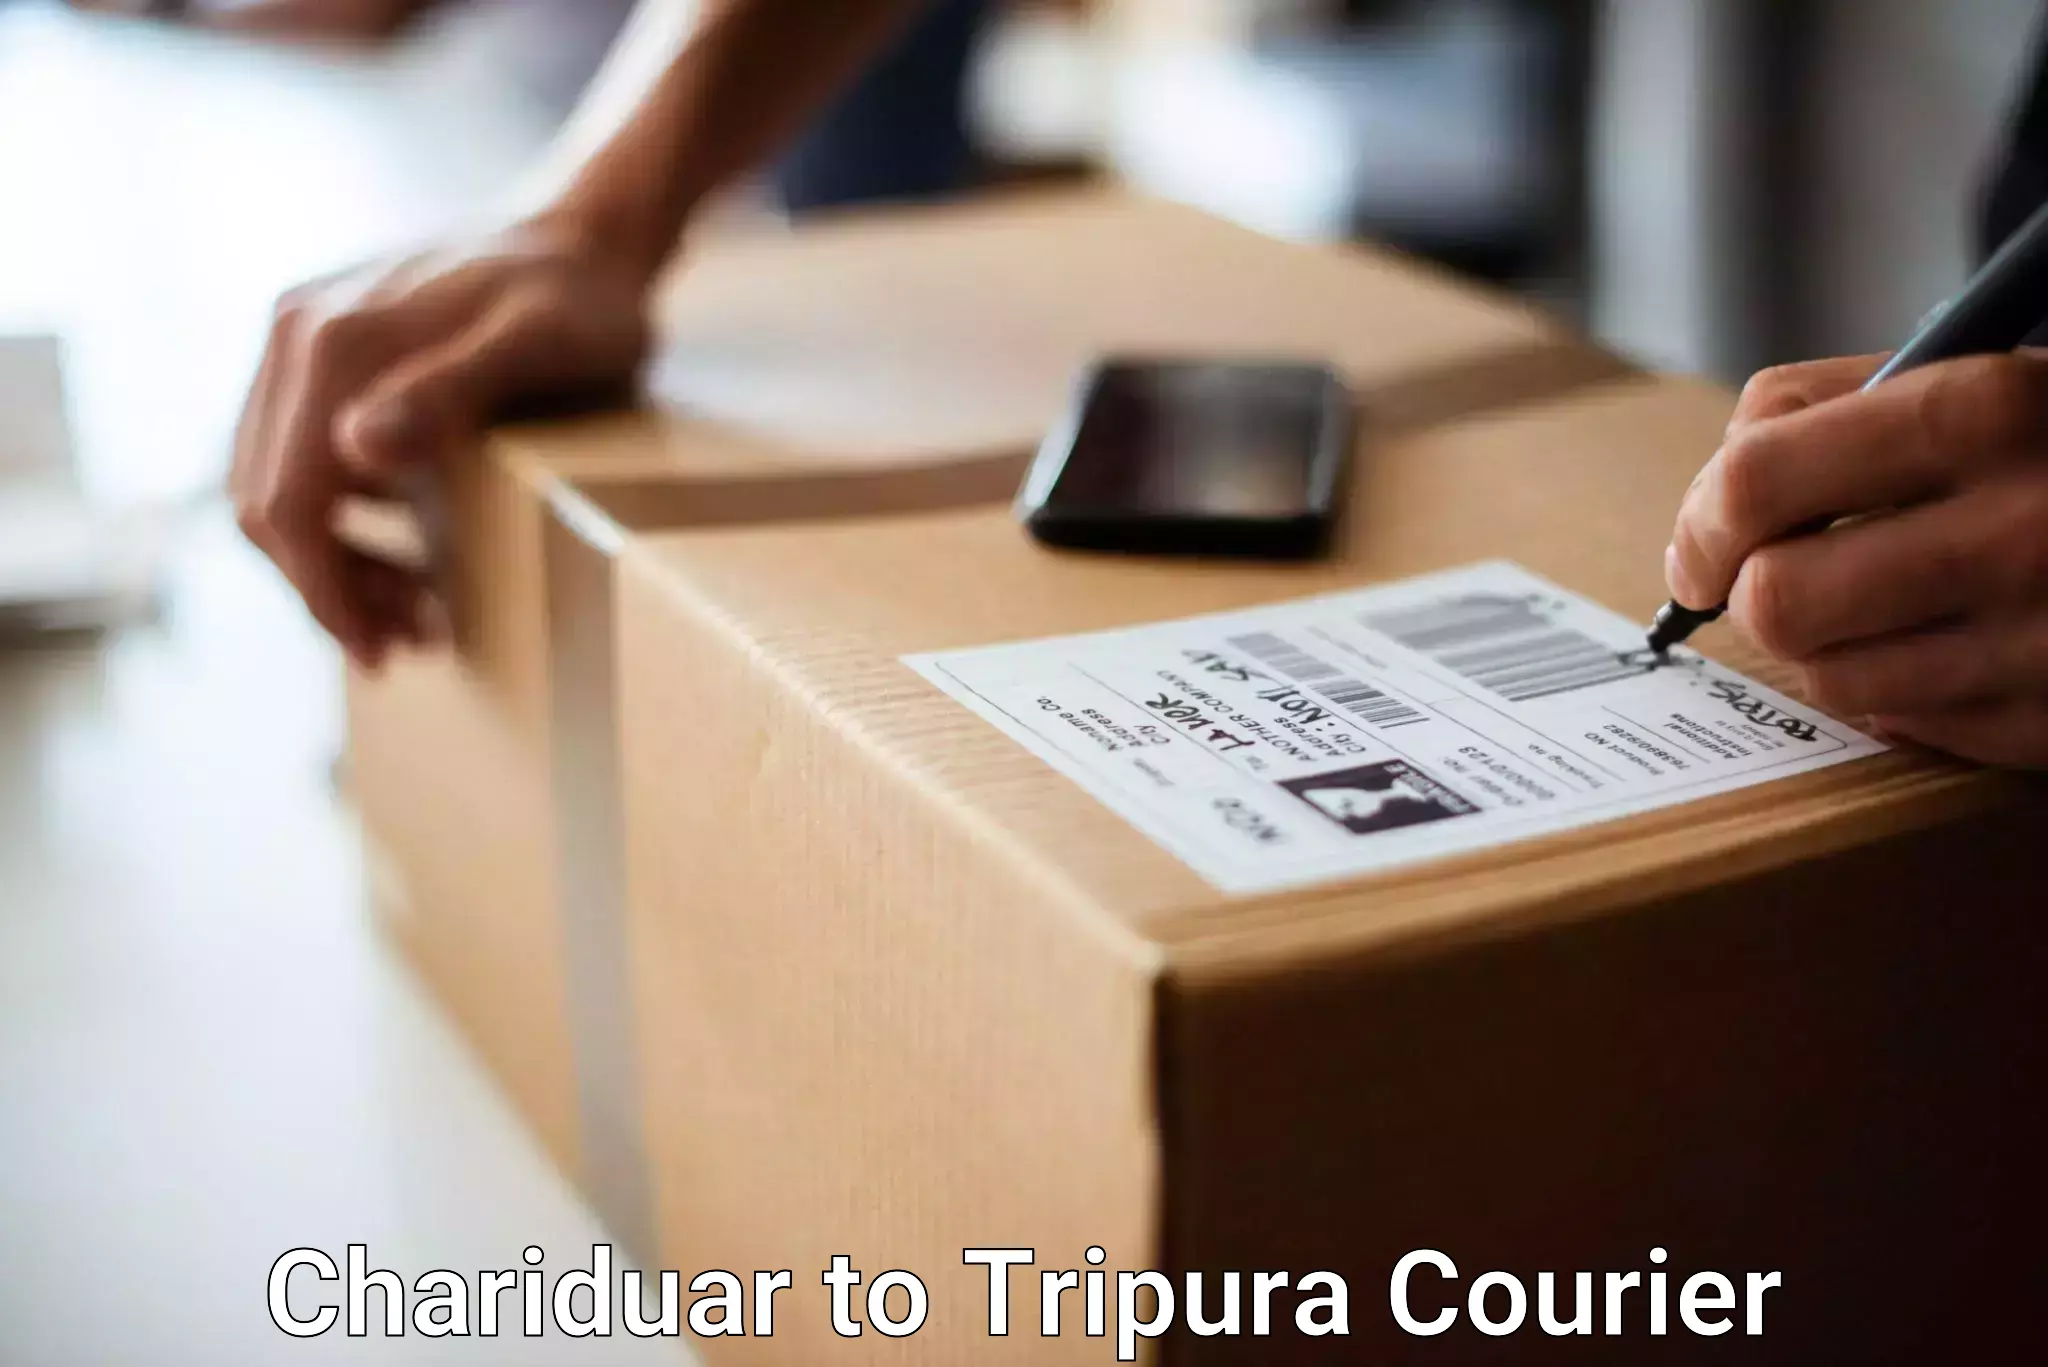 Same day luggage service Chariduar to Tripura